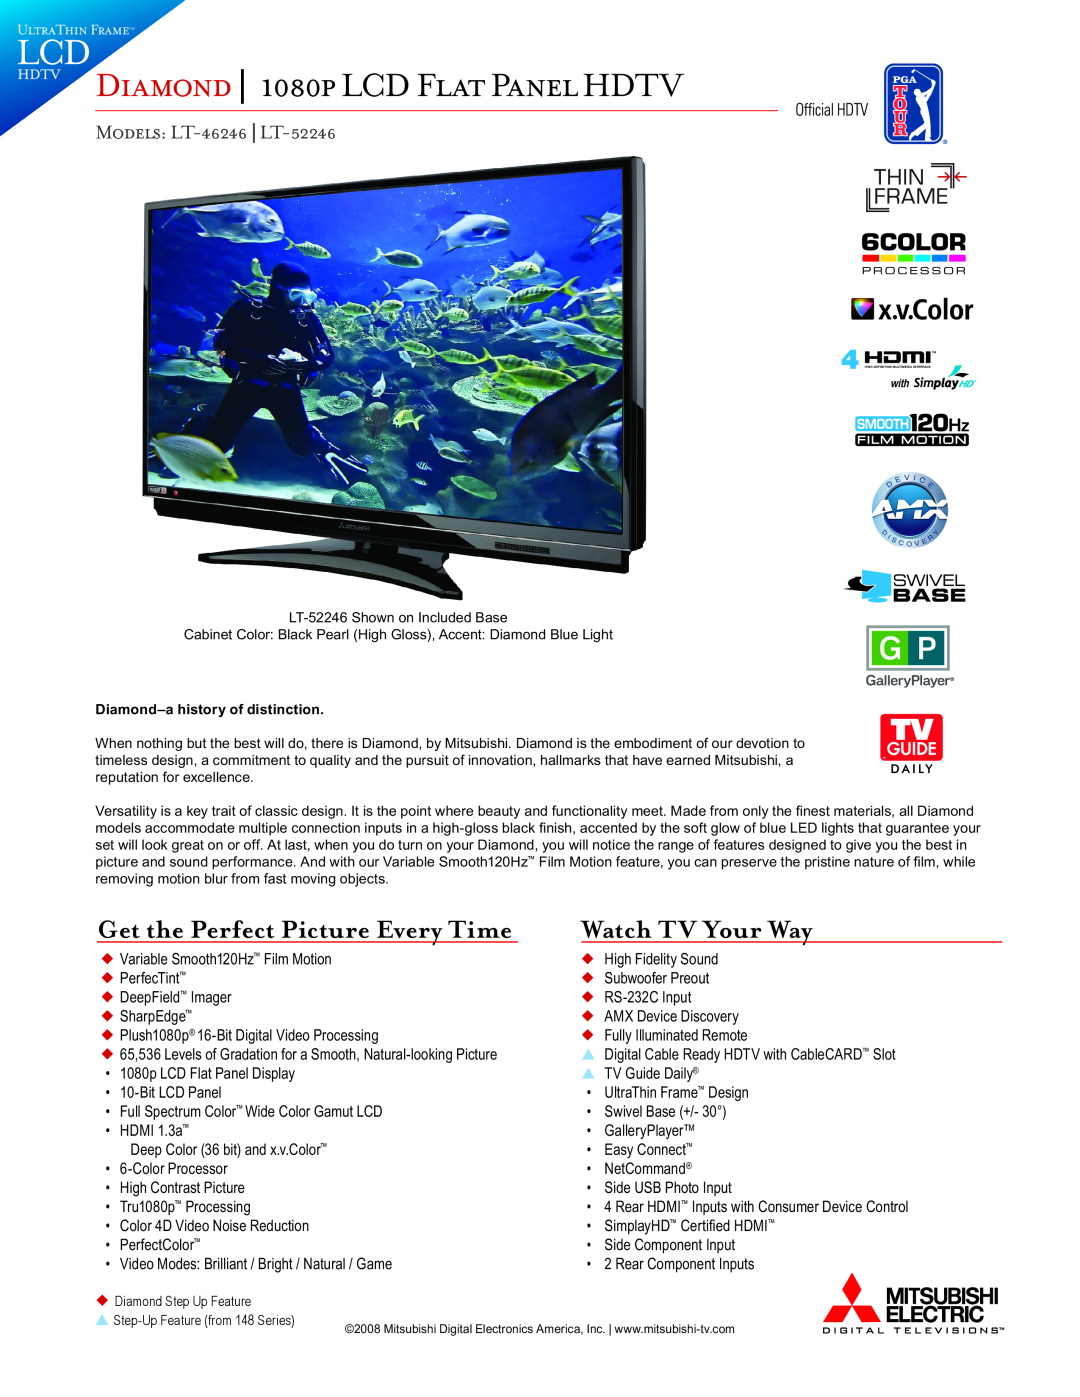 Mitsubishi 1080P manual Diamond 1080p LCD Flat Panel HDTV, Watch TV Your Way, Models LT-46246 LT-52246, UltraThin Frametm 